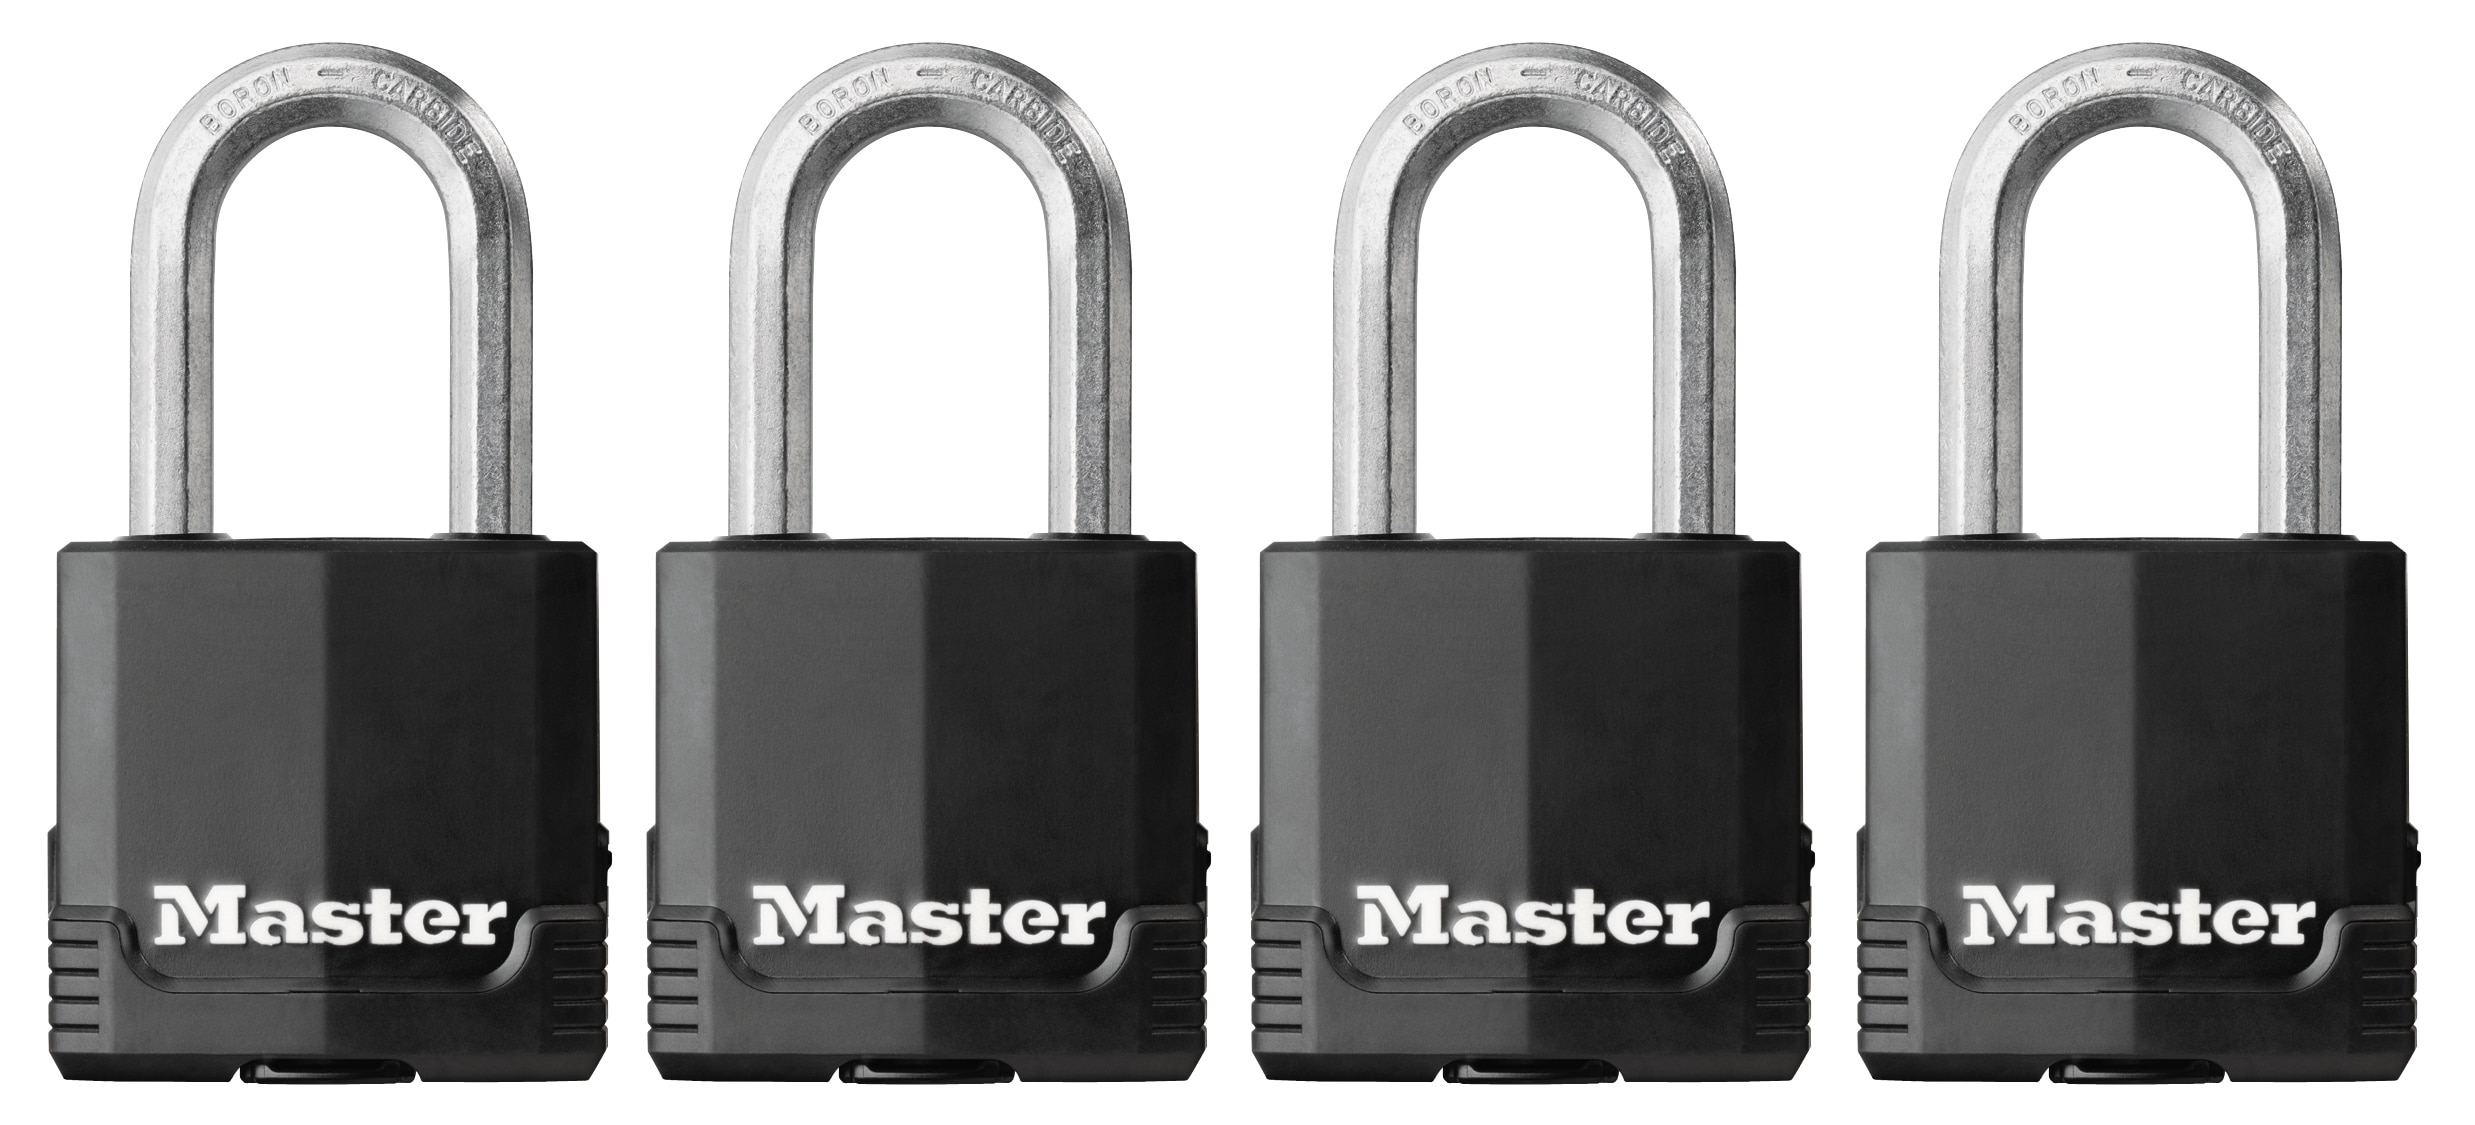 Masterlock #5 Padlock Keys - Phox Locks